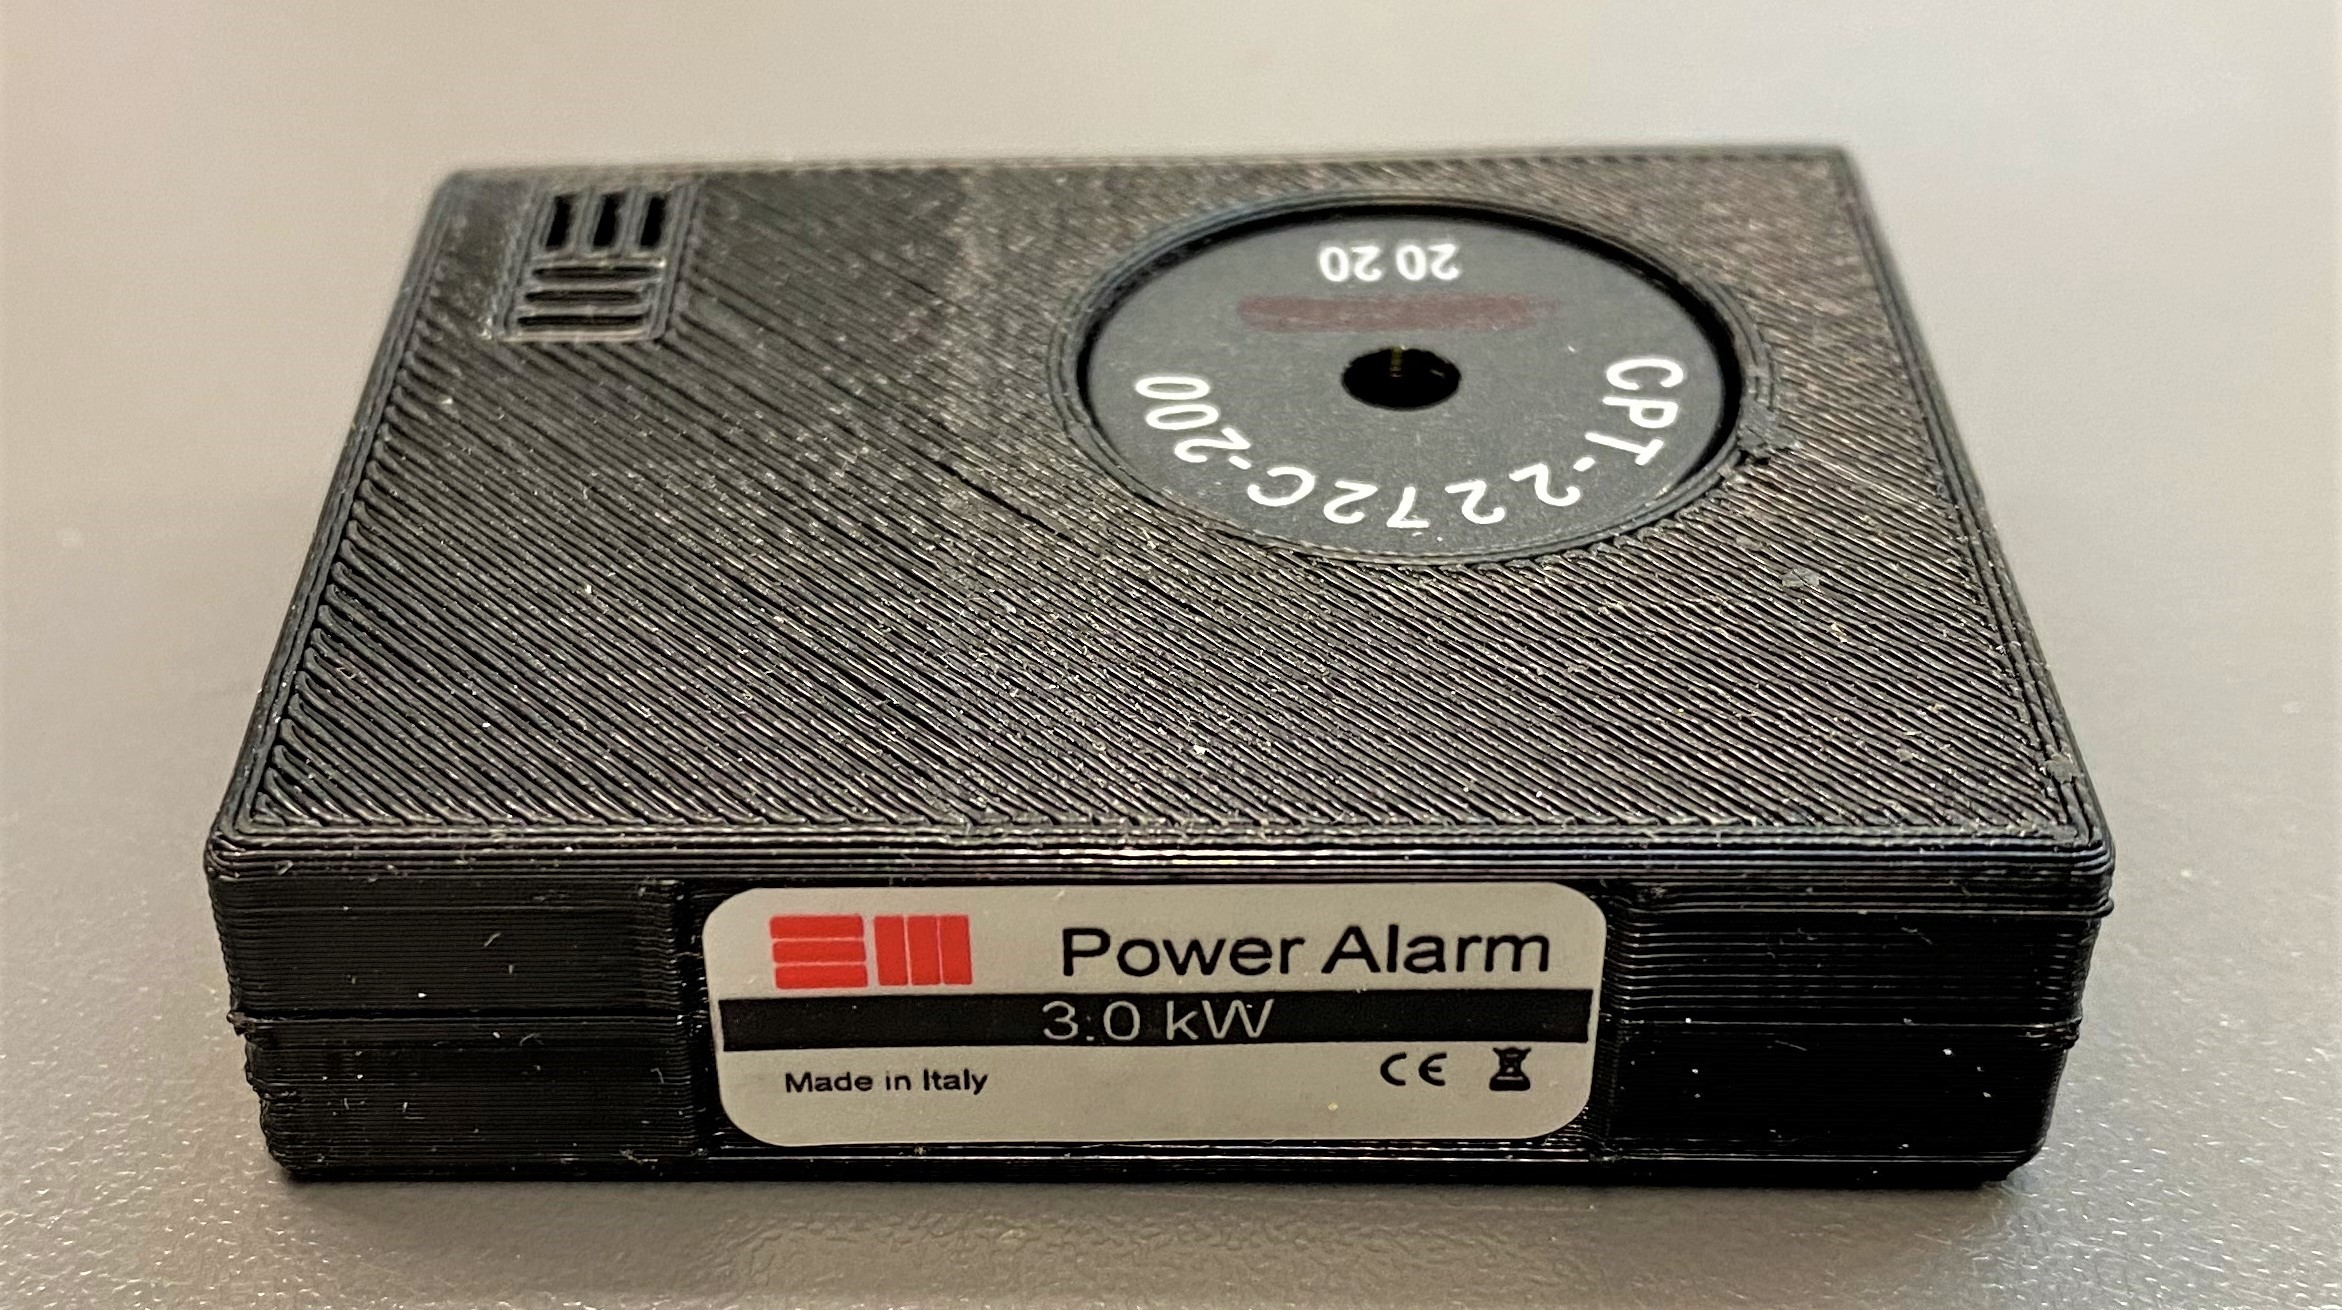 Power Alarm